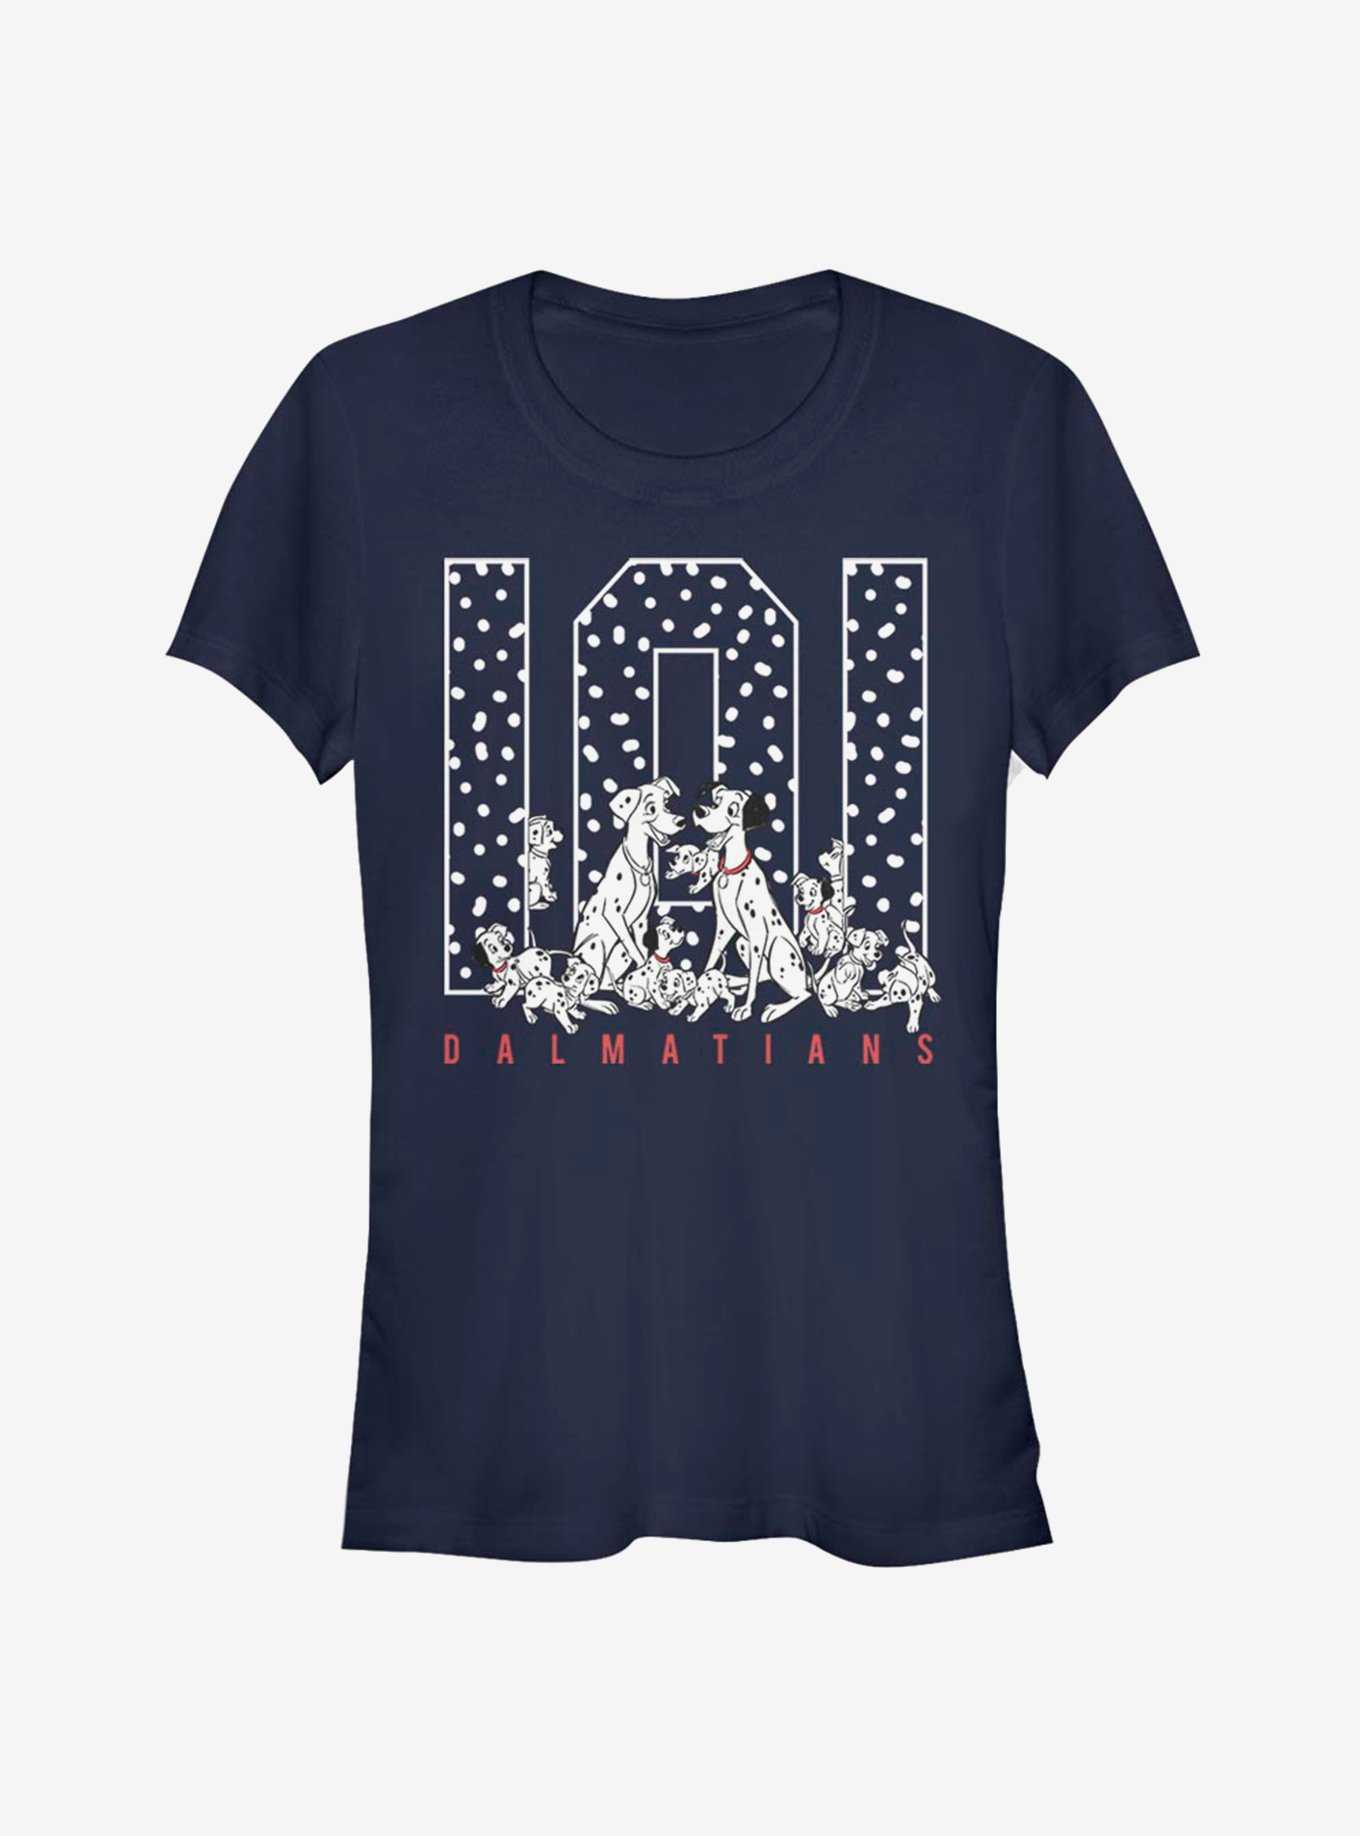 101 Dalmatians Graphic T-Shirt by esteesdave